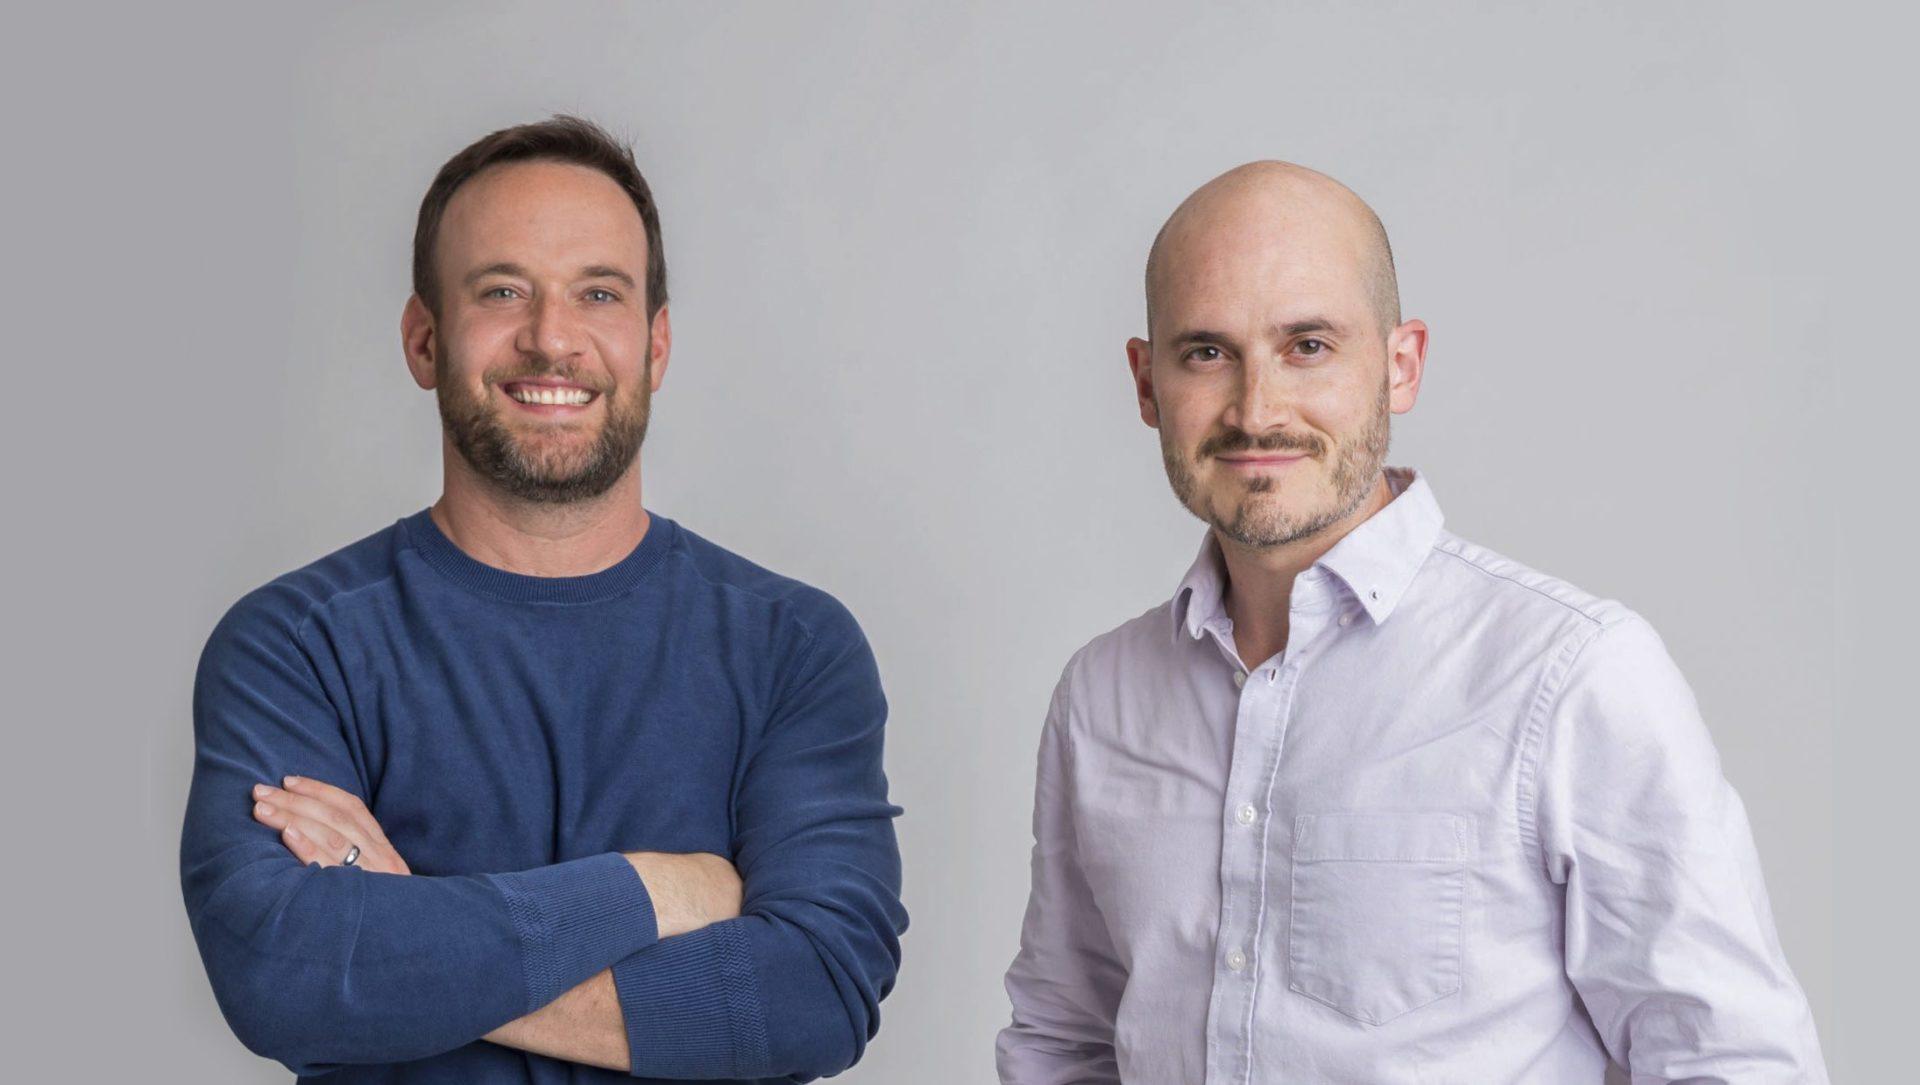 VENN's co-founders Ariel Horn and Ben Kusin